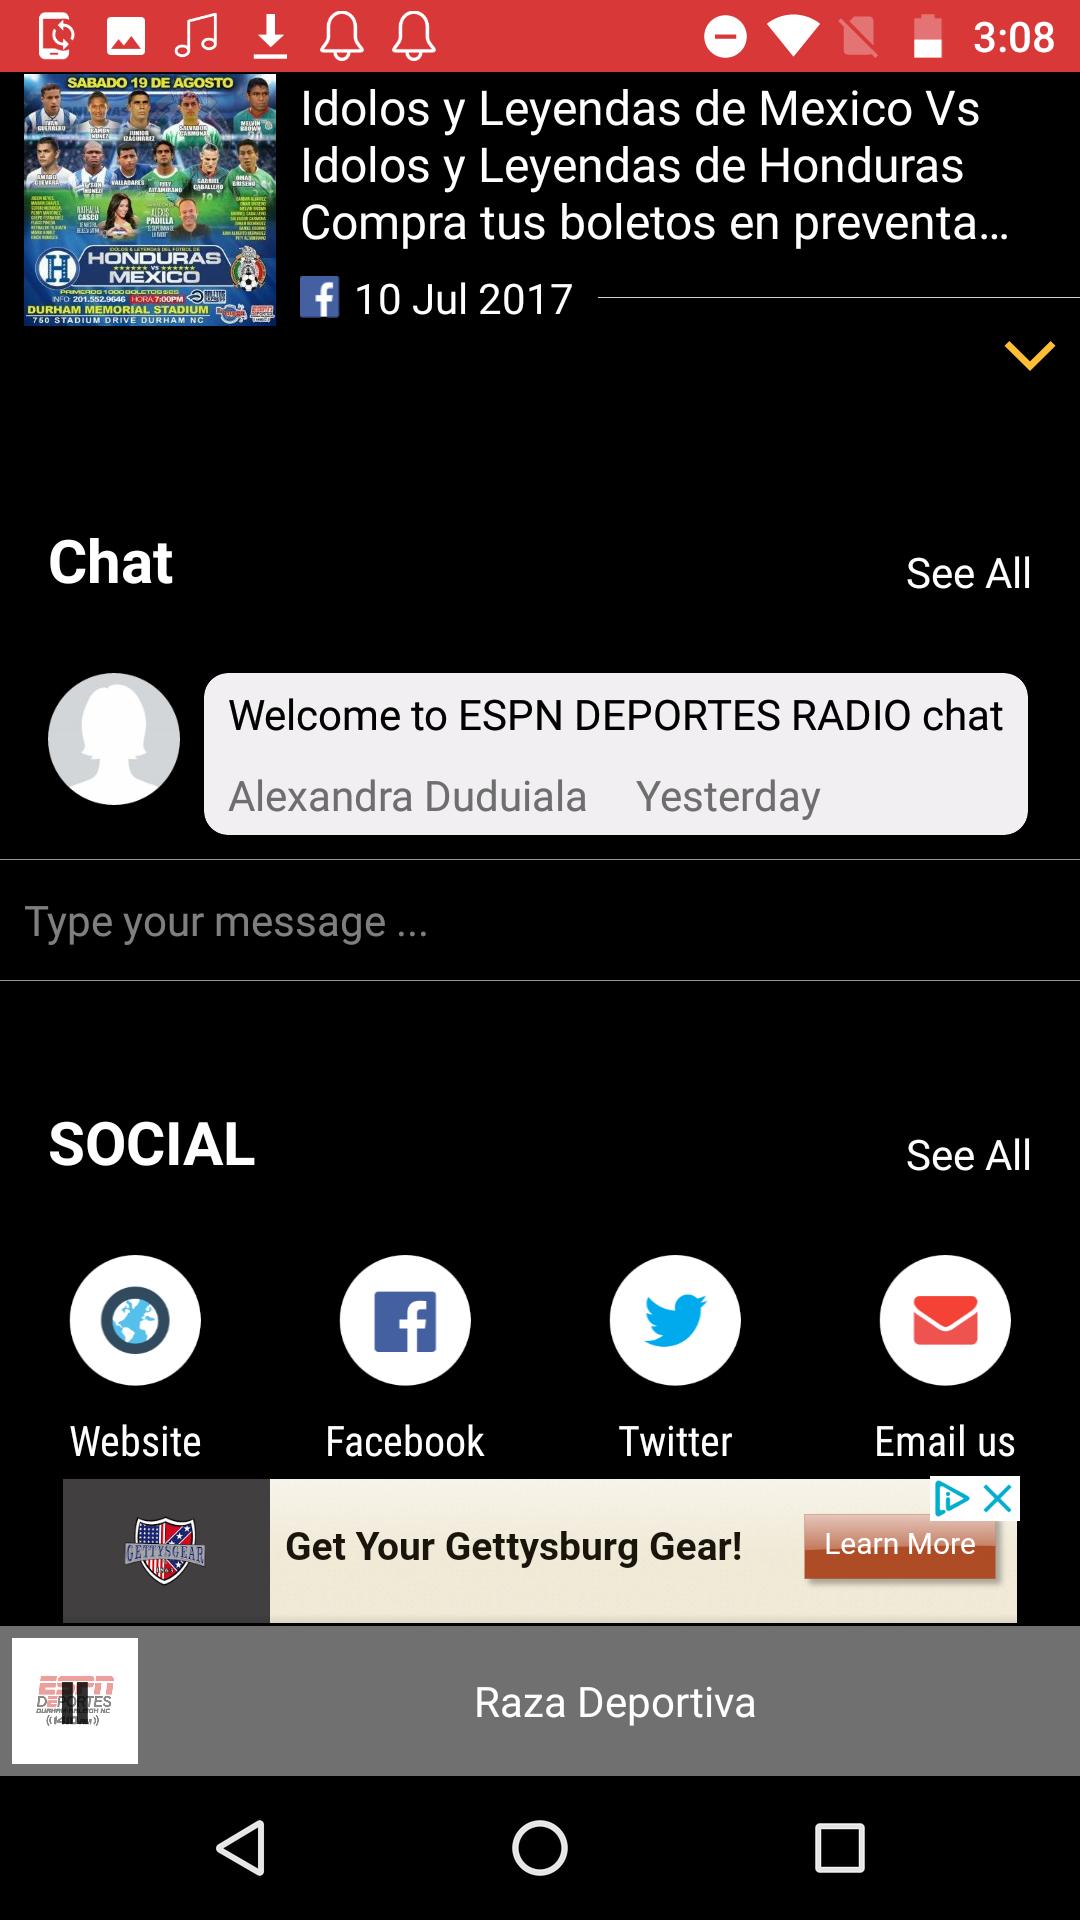 ESPN DEPORTES RADIO for Android - APK Download